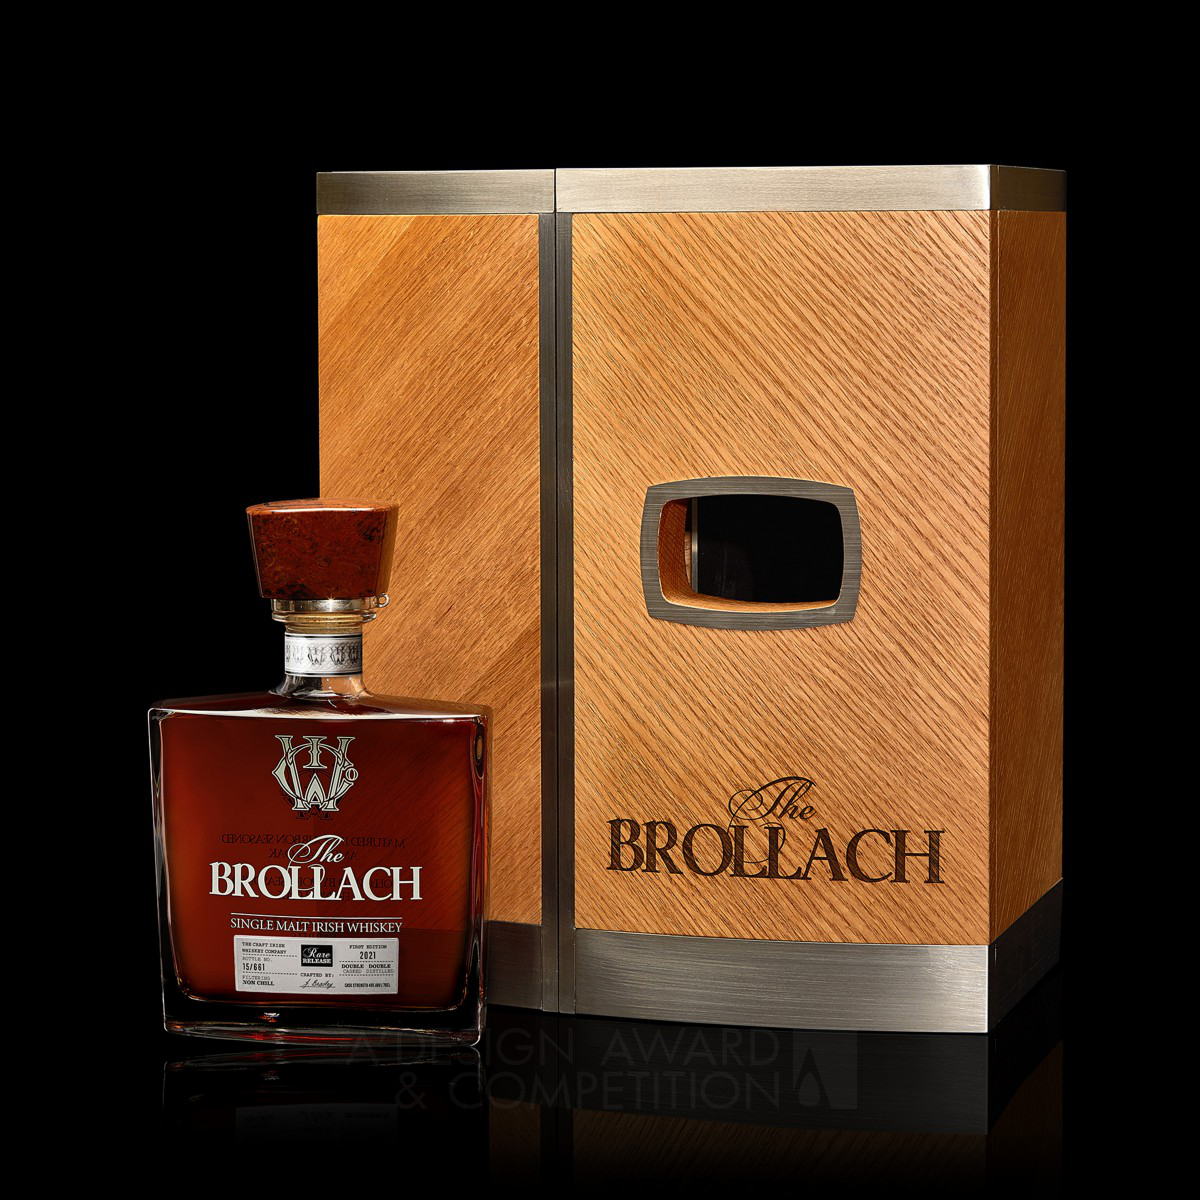 The Brollach <b>Single Malt Irish Whiskey